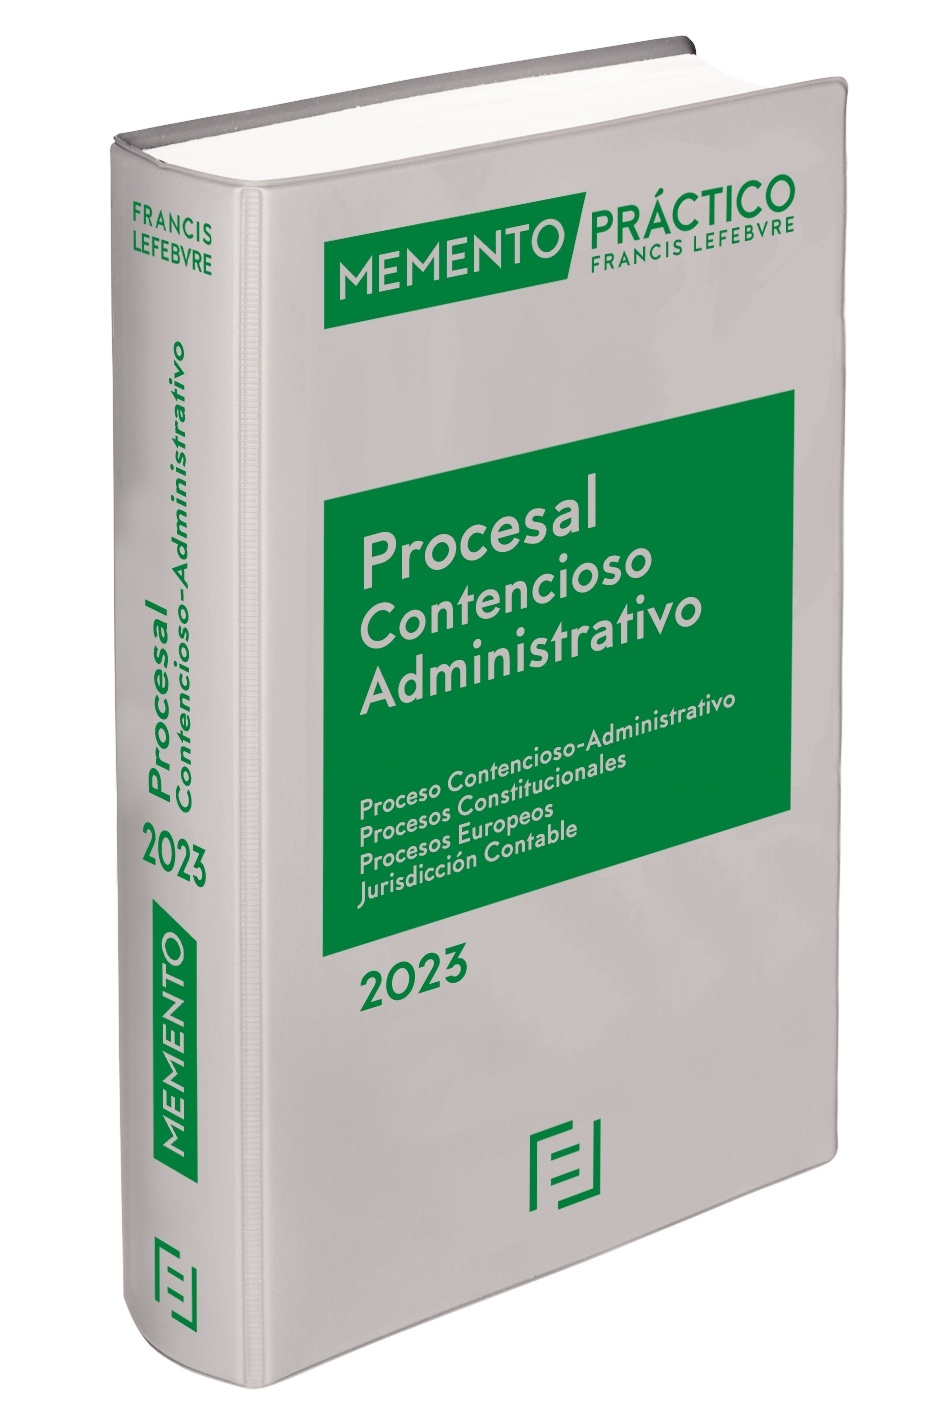 Memento práctico procesal contencioso-administrativo 2023